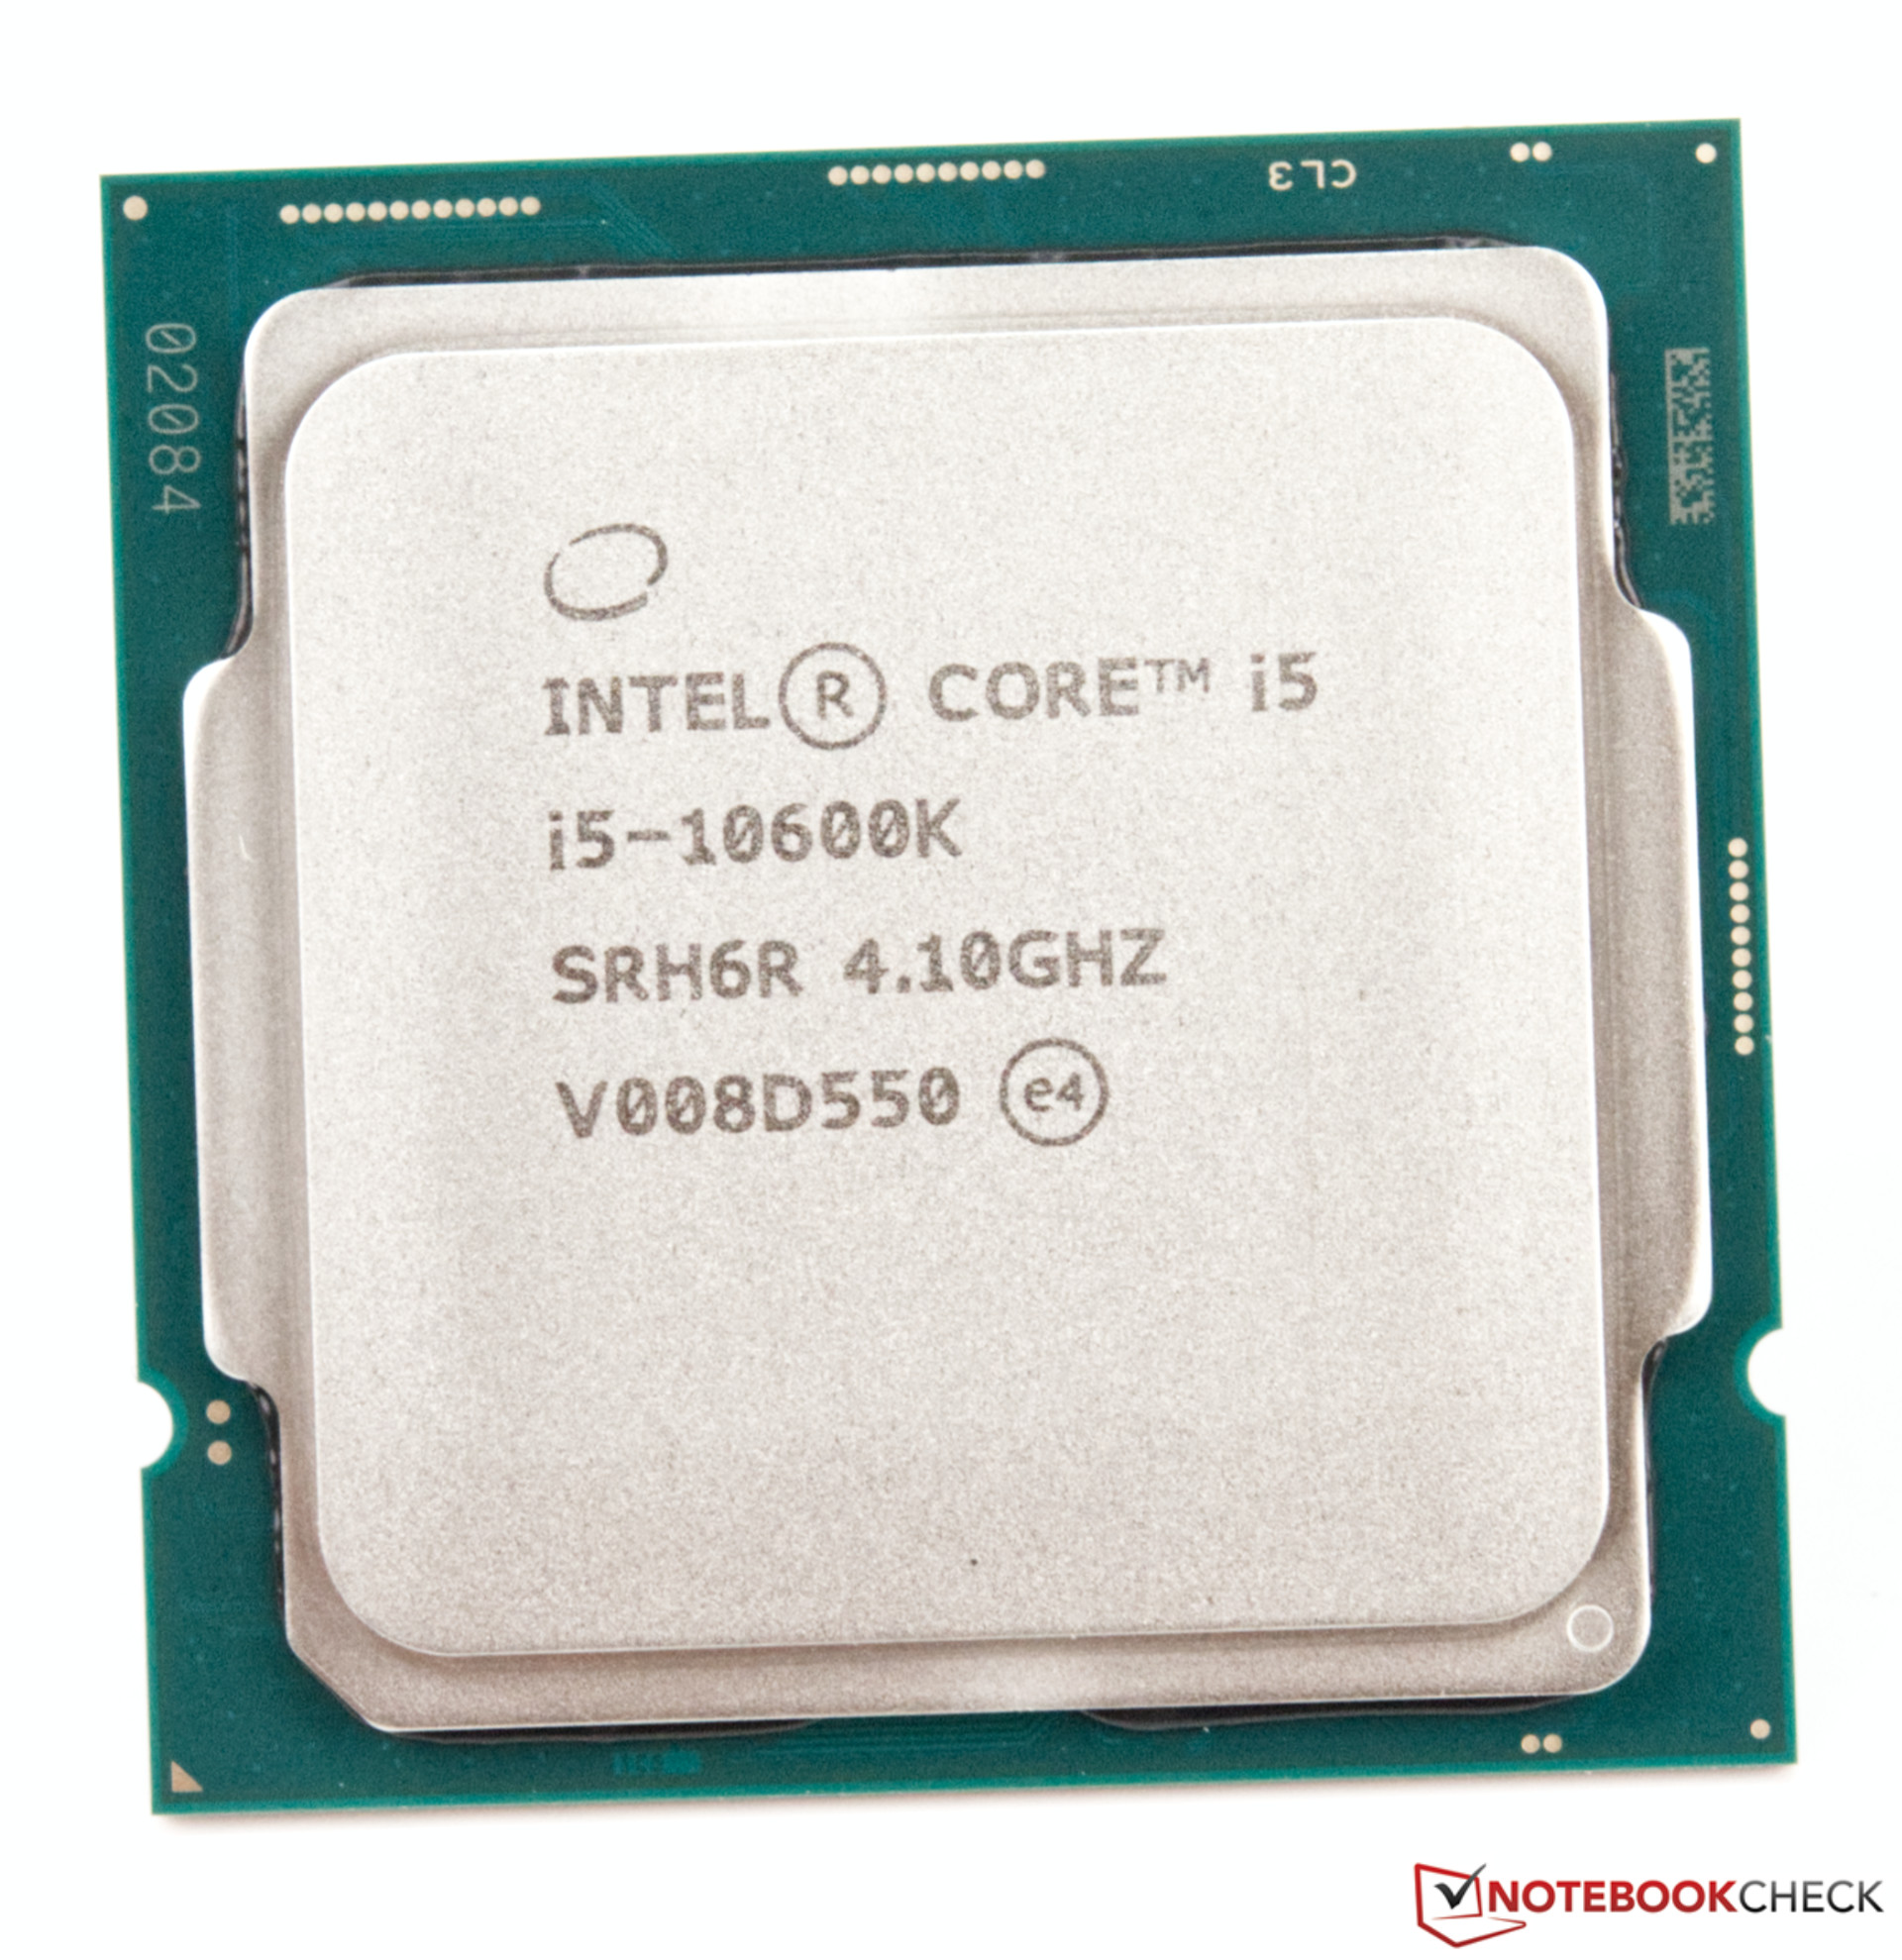 klauw Blazen Grootte Intel Core i5-10600K Processor - Benchmarks and Specs - NotebookCheck.net  Tech